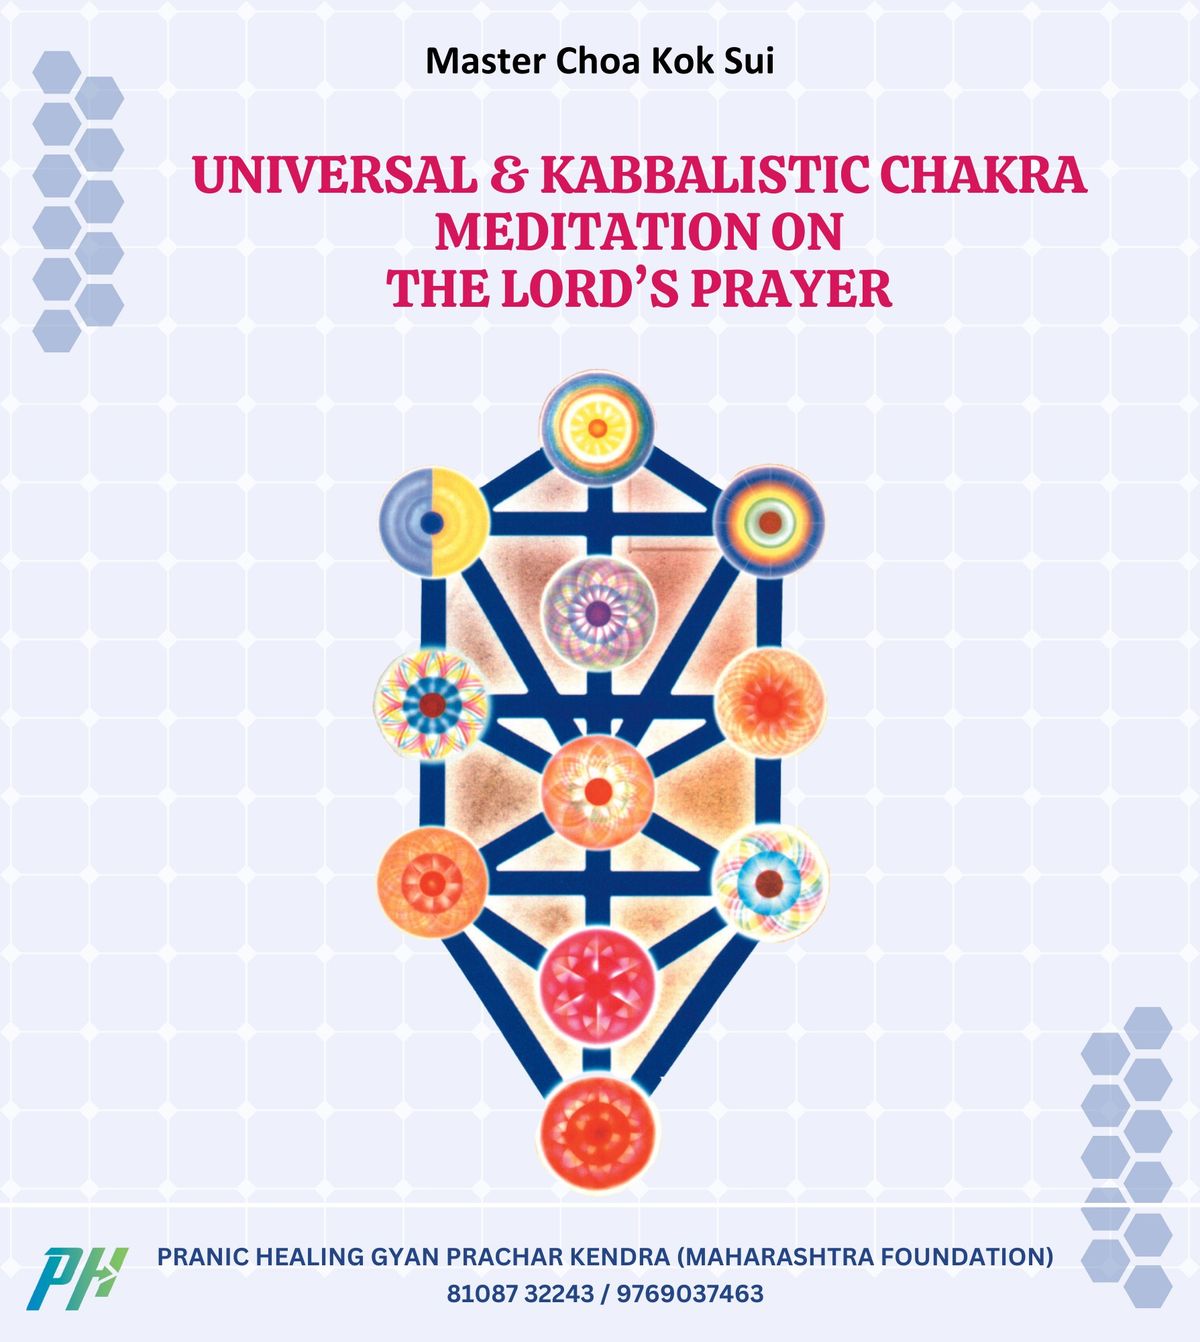  UNIVERSAL & KABBALLISTIC CHAKRA MEDITATION on the LORD'S PRAYER